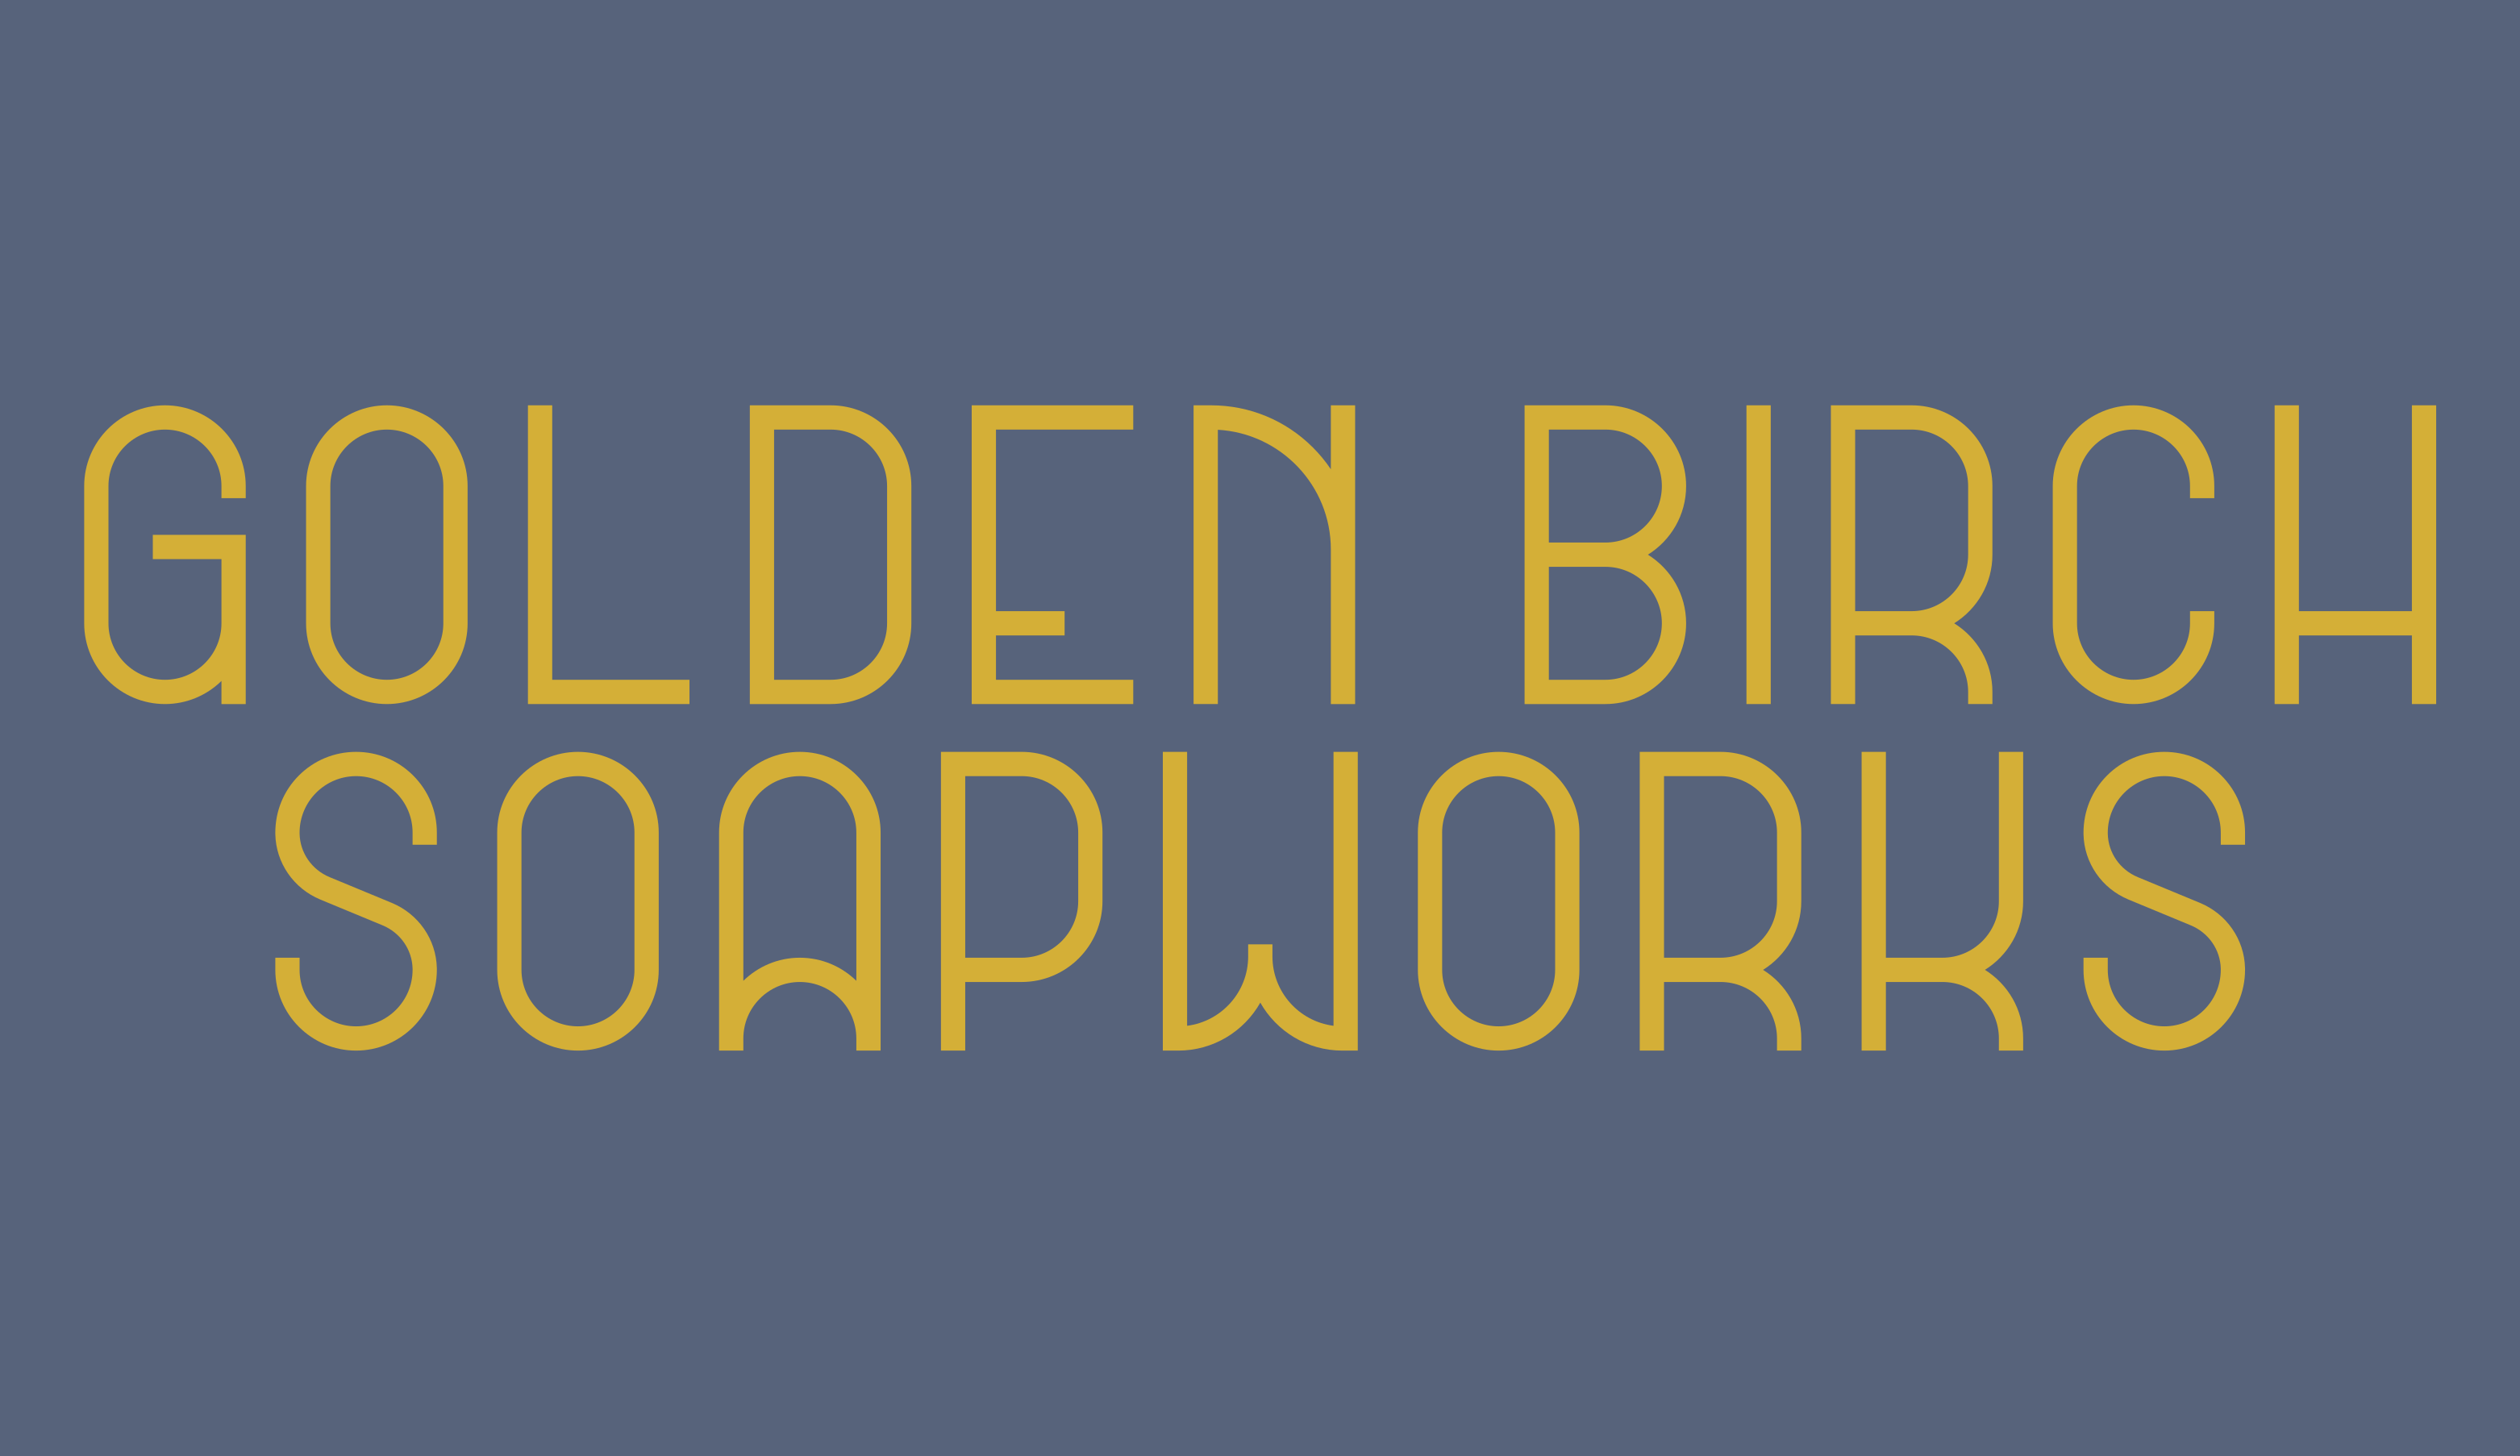 Golden Birch SoapWorks